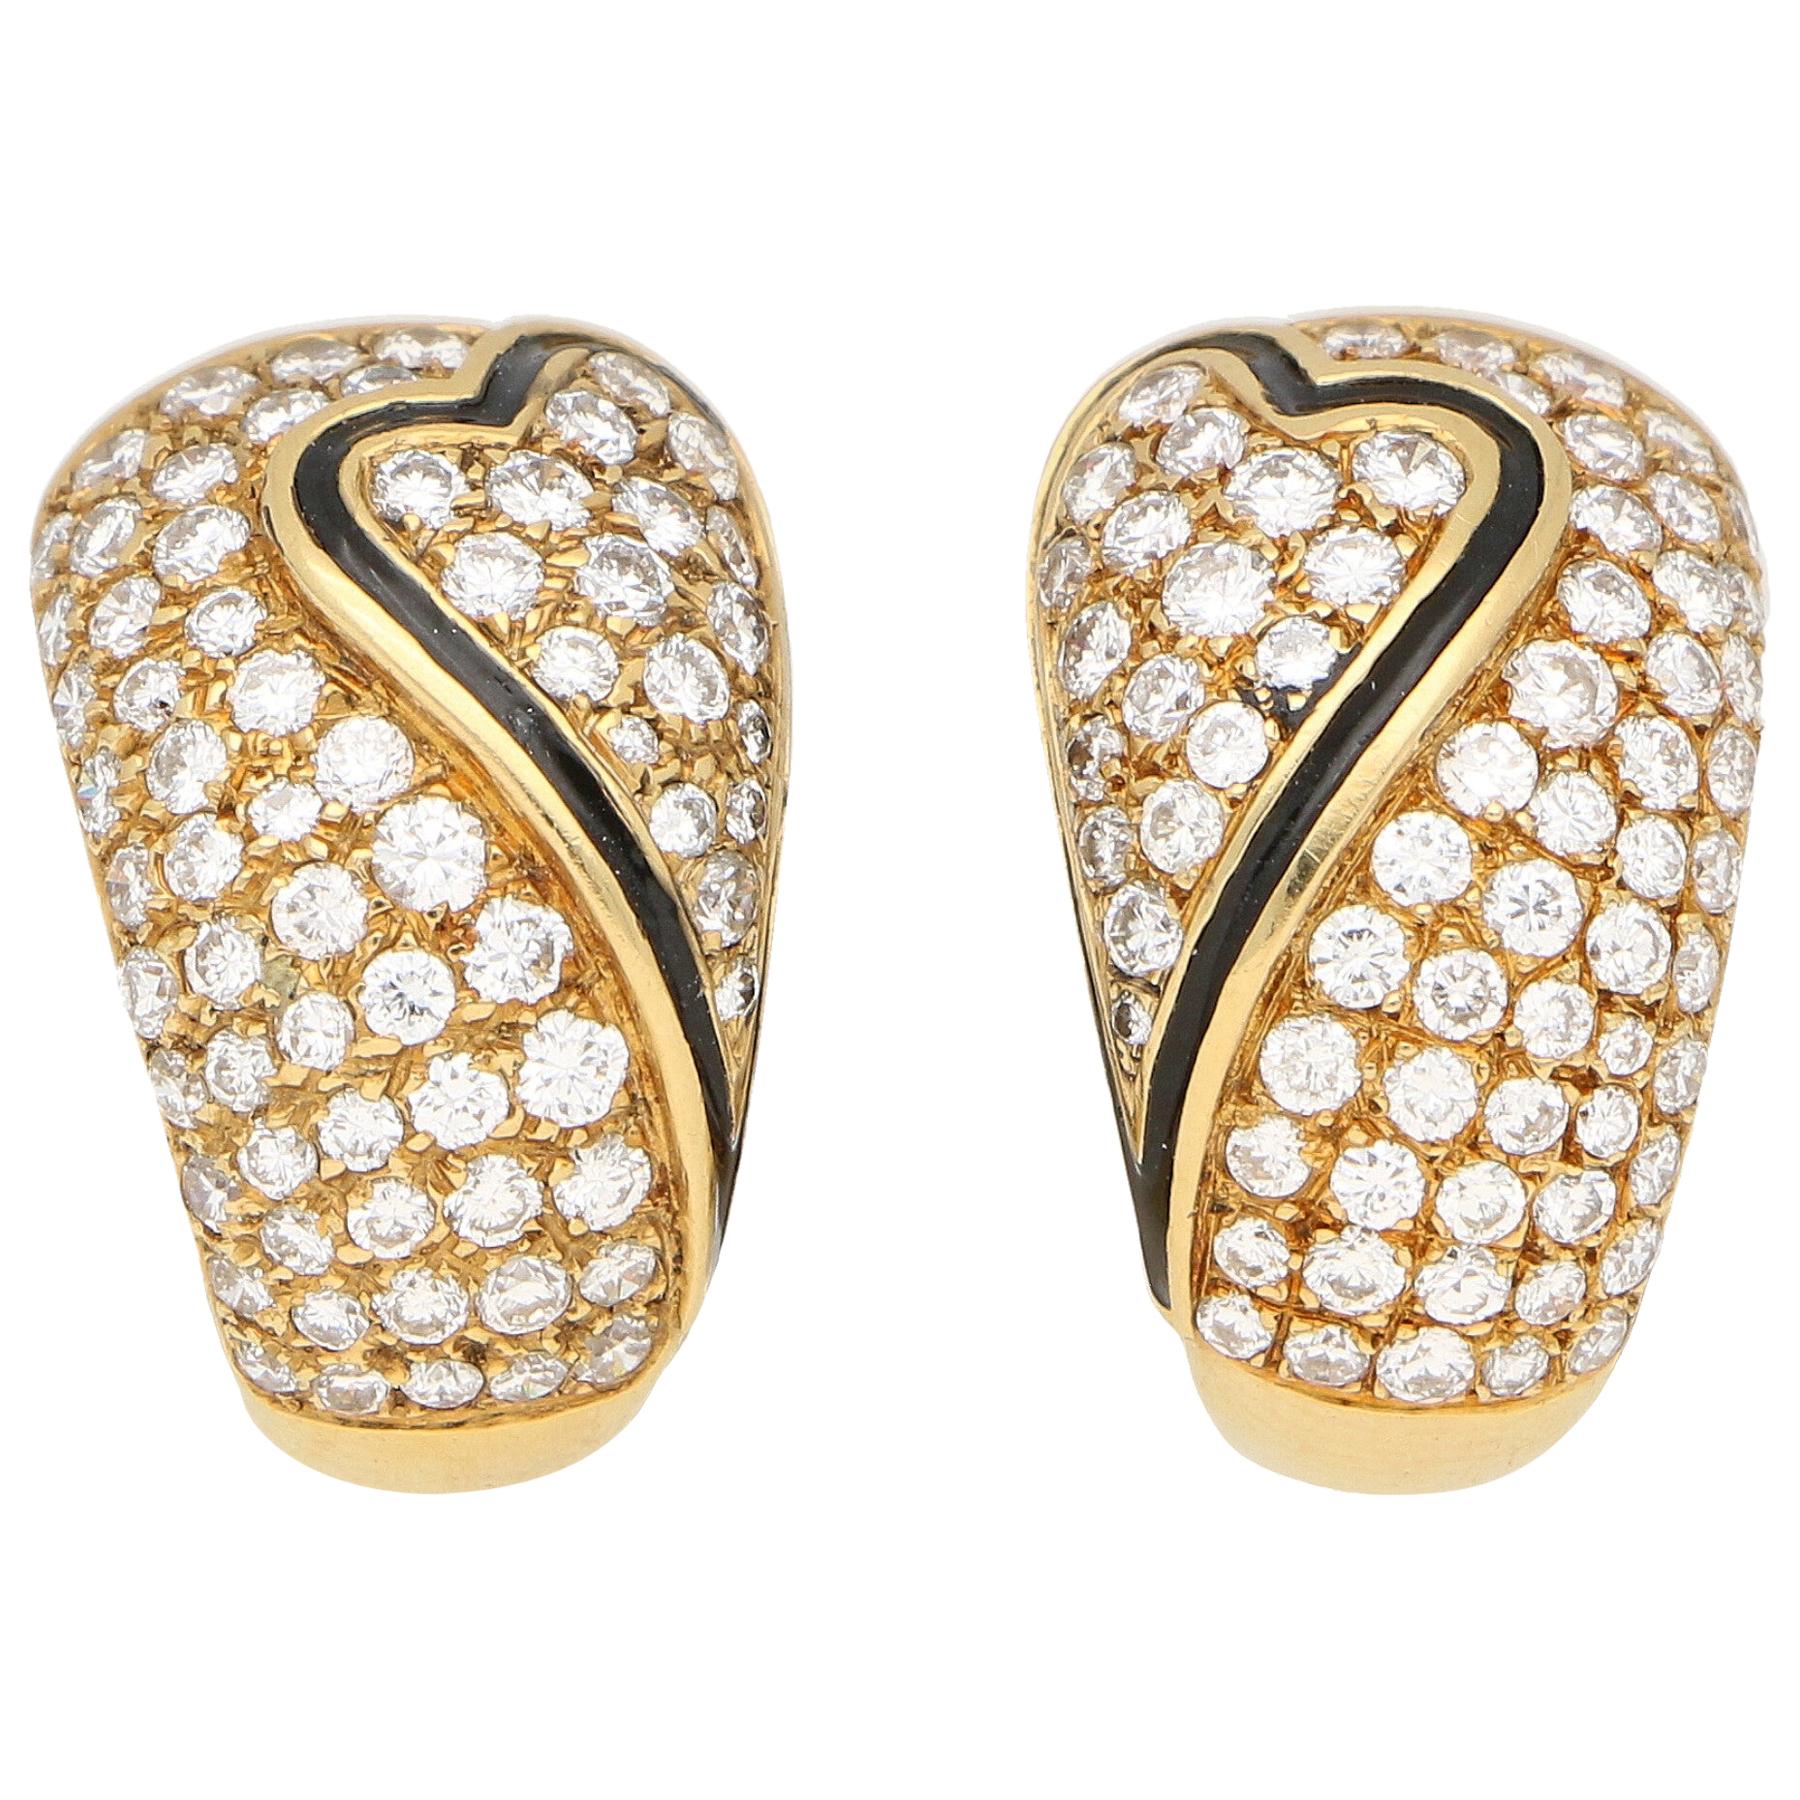 OJ Perrin Black Enamel Heart and Diamond Hoop Earrings in 18 Karat Yellow Gold